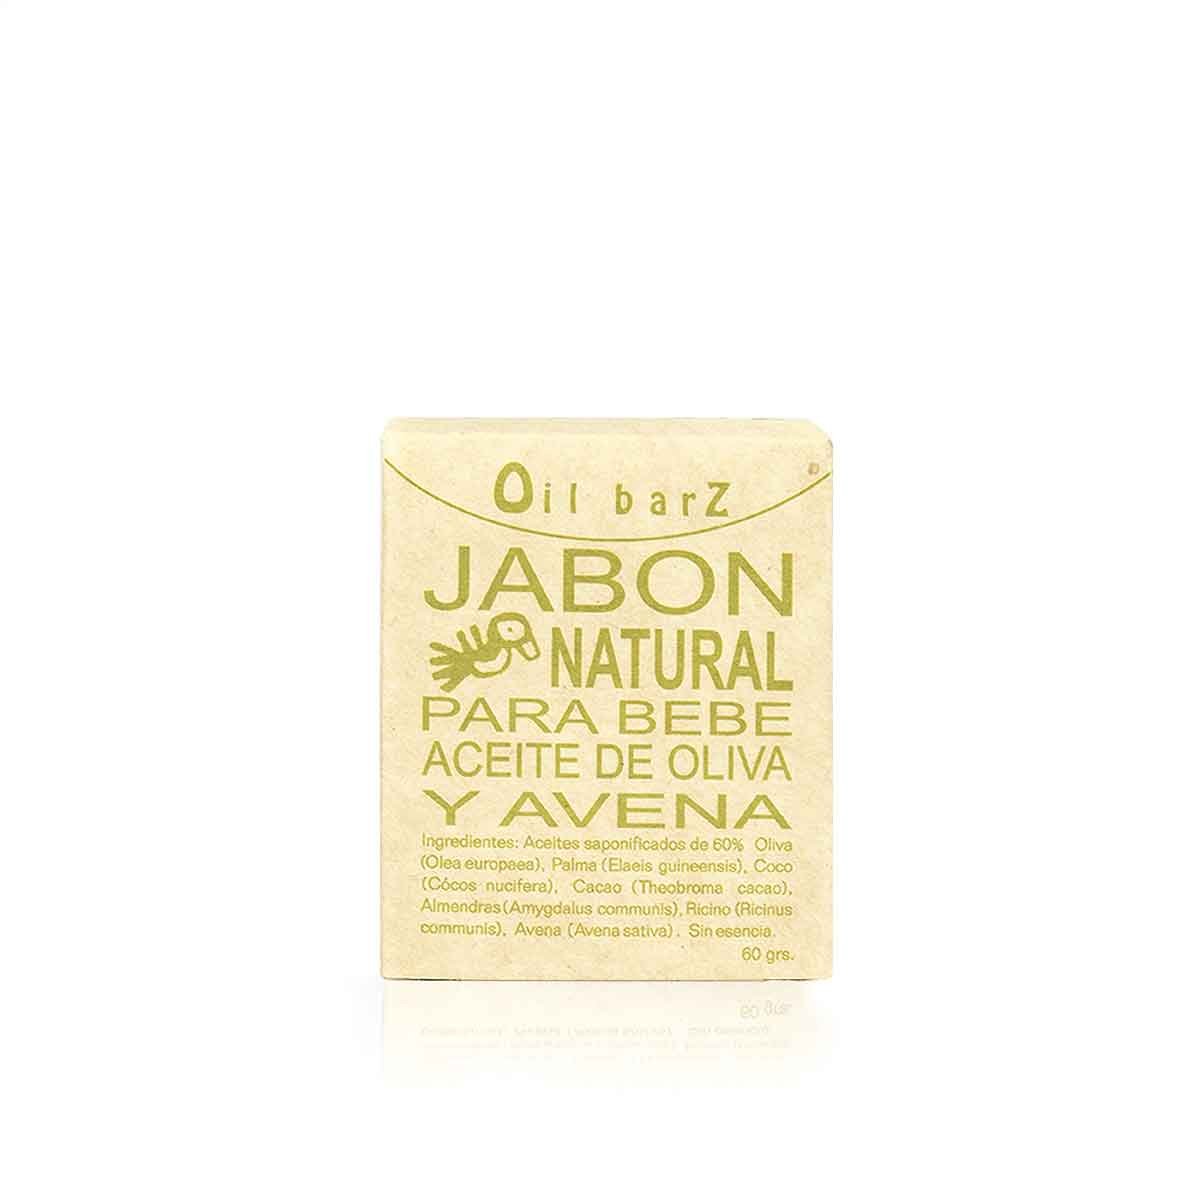 Jabon Natural para Bebe -  Oliva y Avena Oil Barz